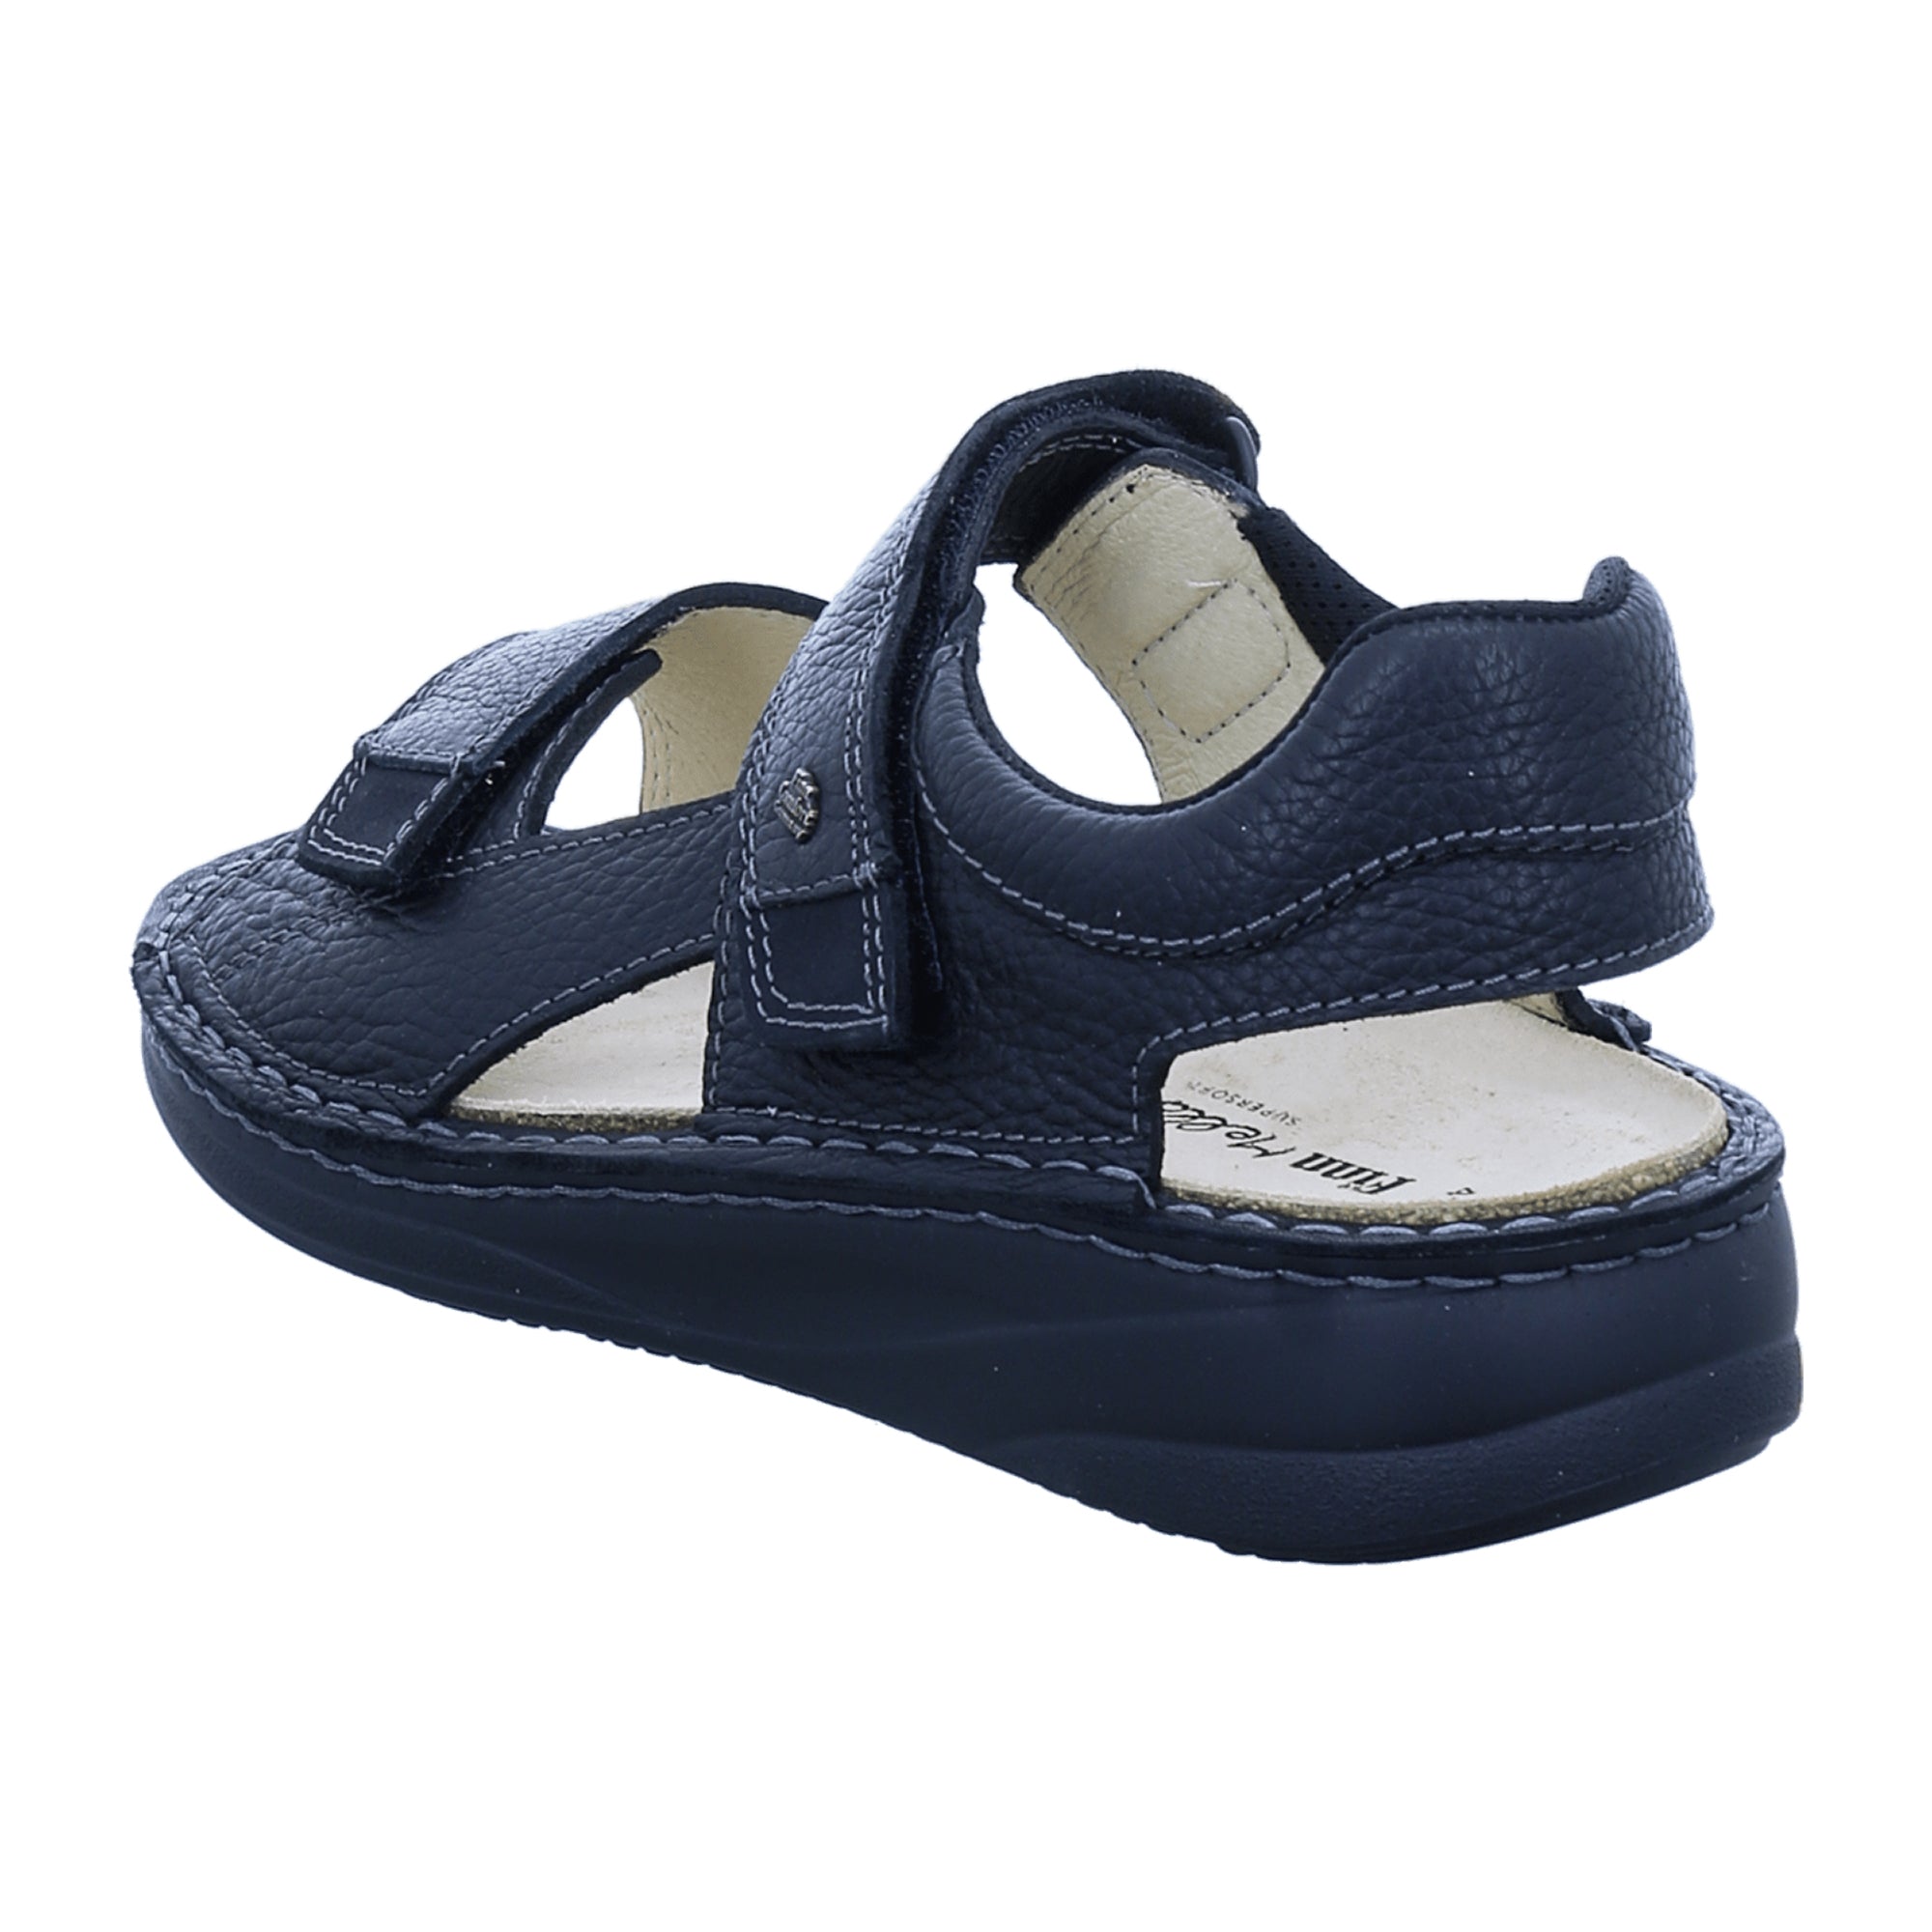 Finn Comfort Skiathos Men's Comfort Sandals - Stylish Black